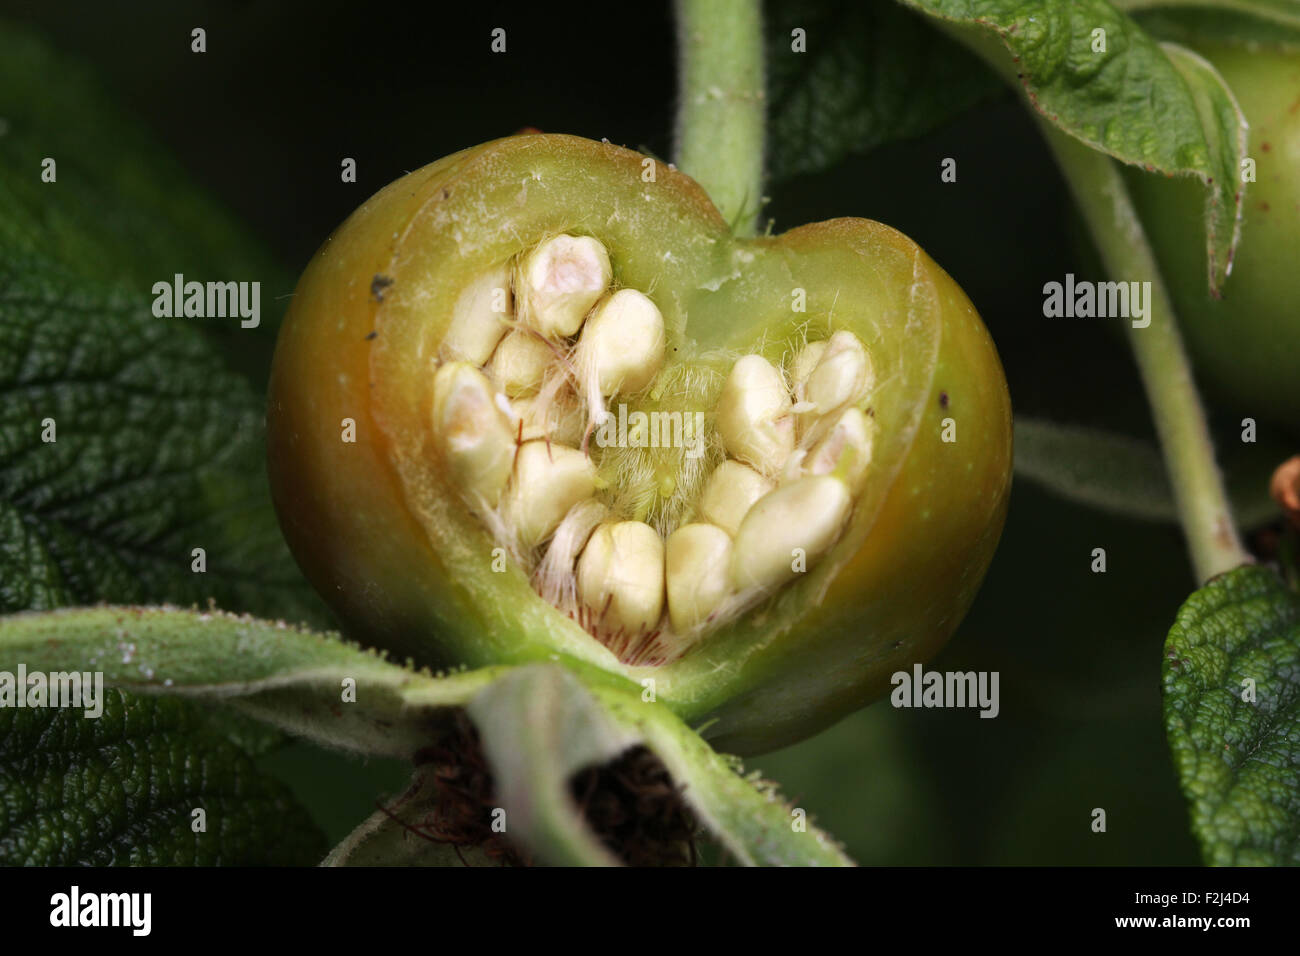 Large Rose hips showing seeds inside casing. Stock Photo